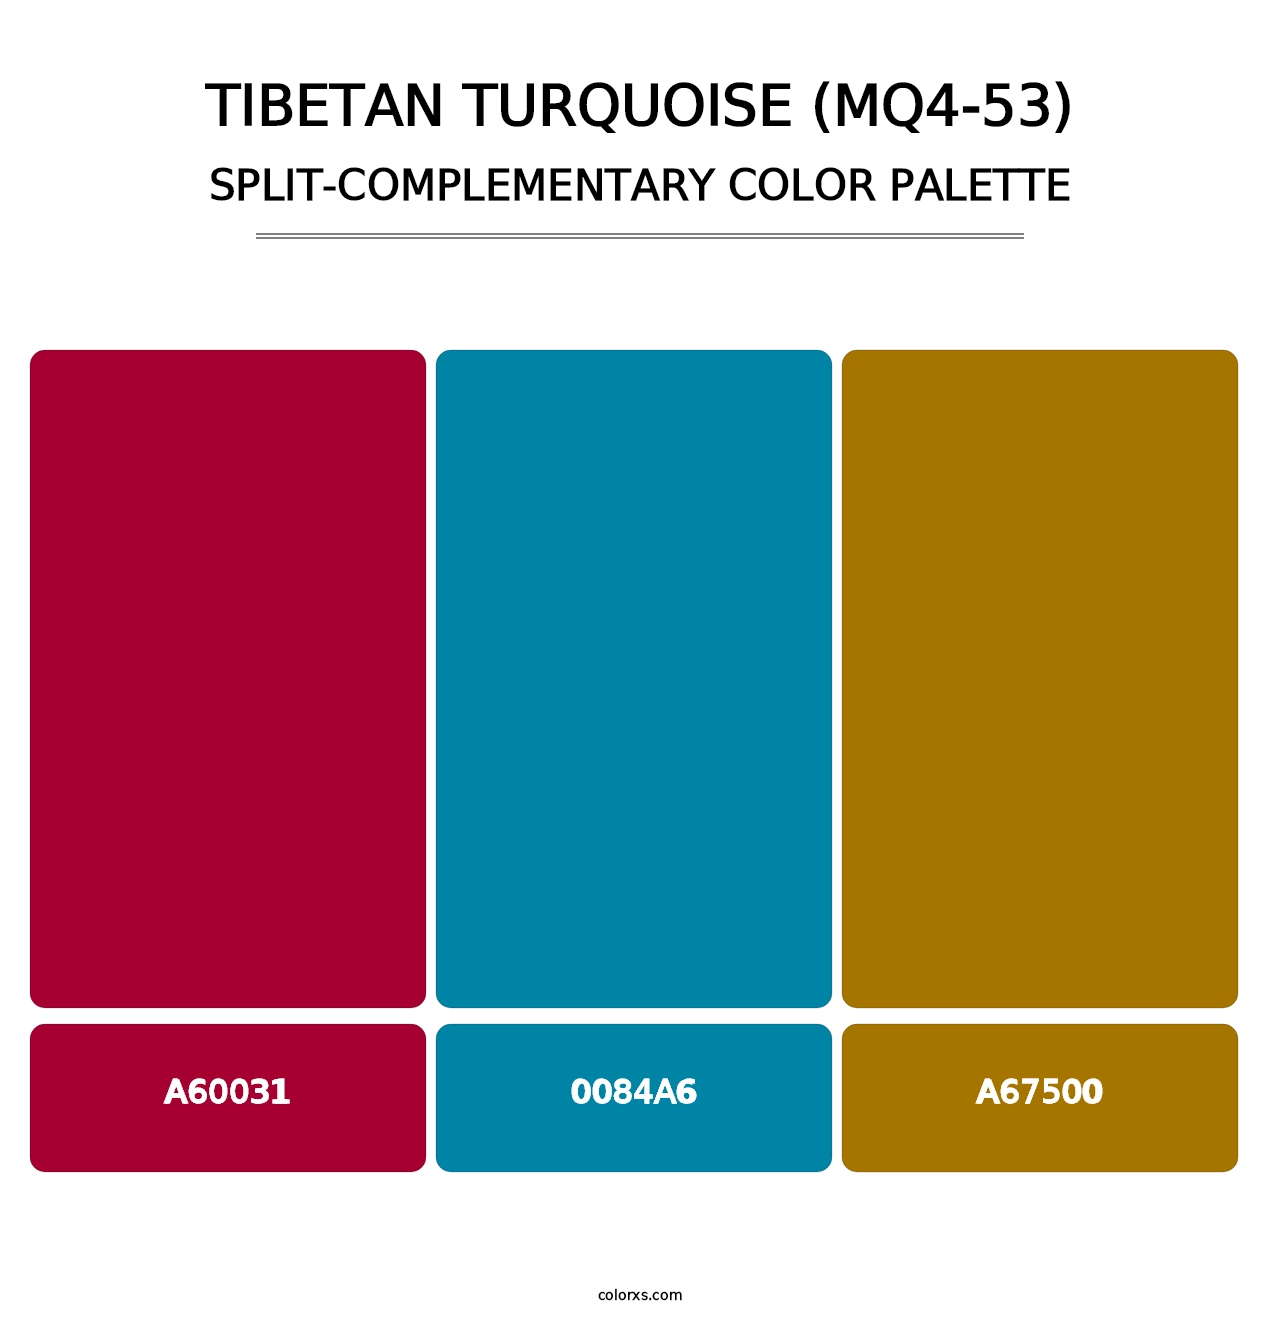 Tibetan Turquoise (MQ4-53) - Split-Complementary Color Palette